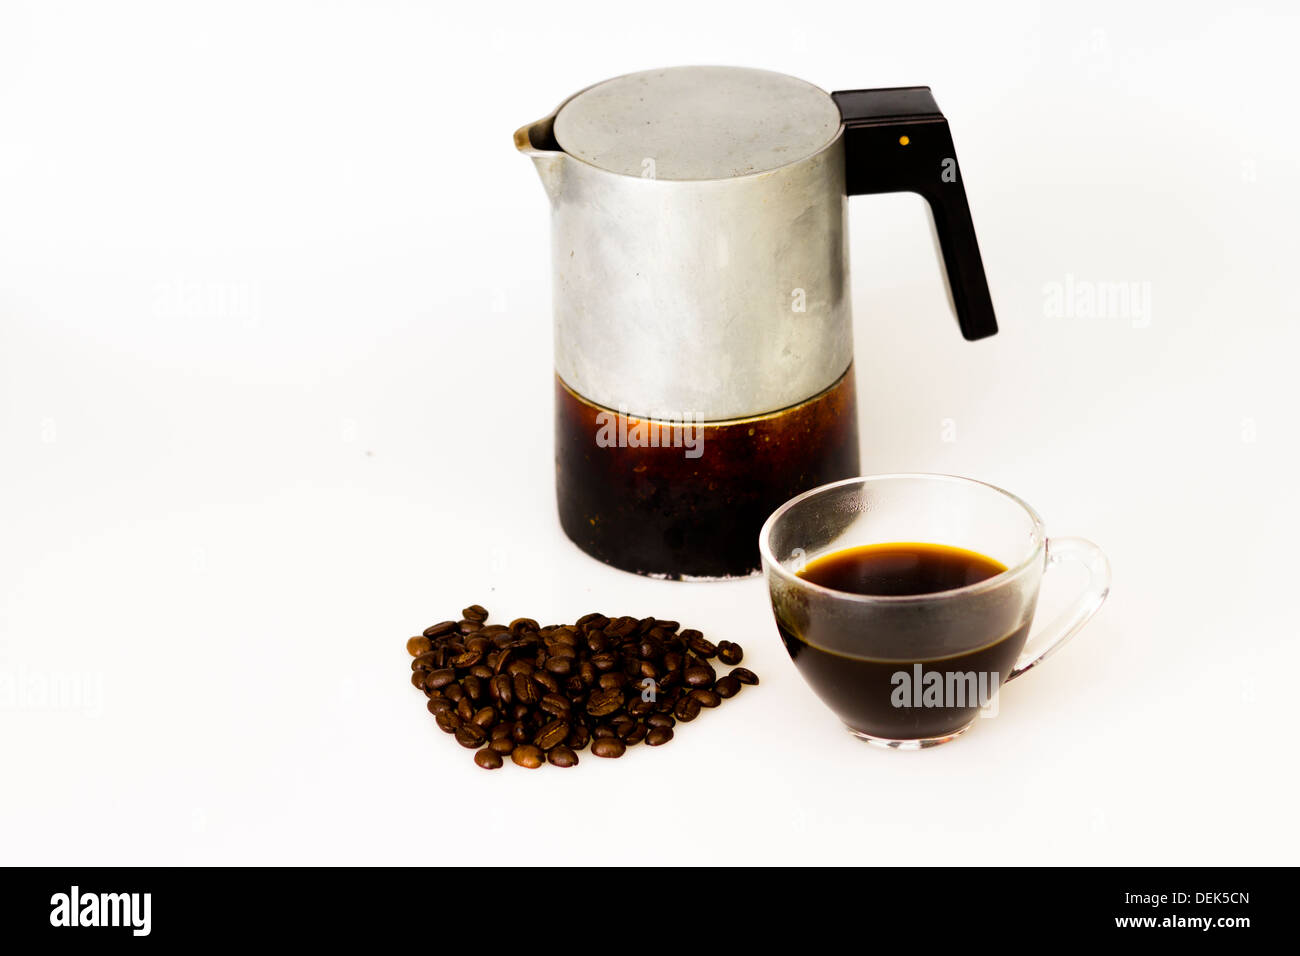 https://c8.alamy.com/comp/DEK5CN/espresso-maker-with-cup-of-coffee-and-beans-DEK5CN.jpg